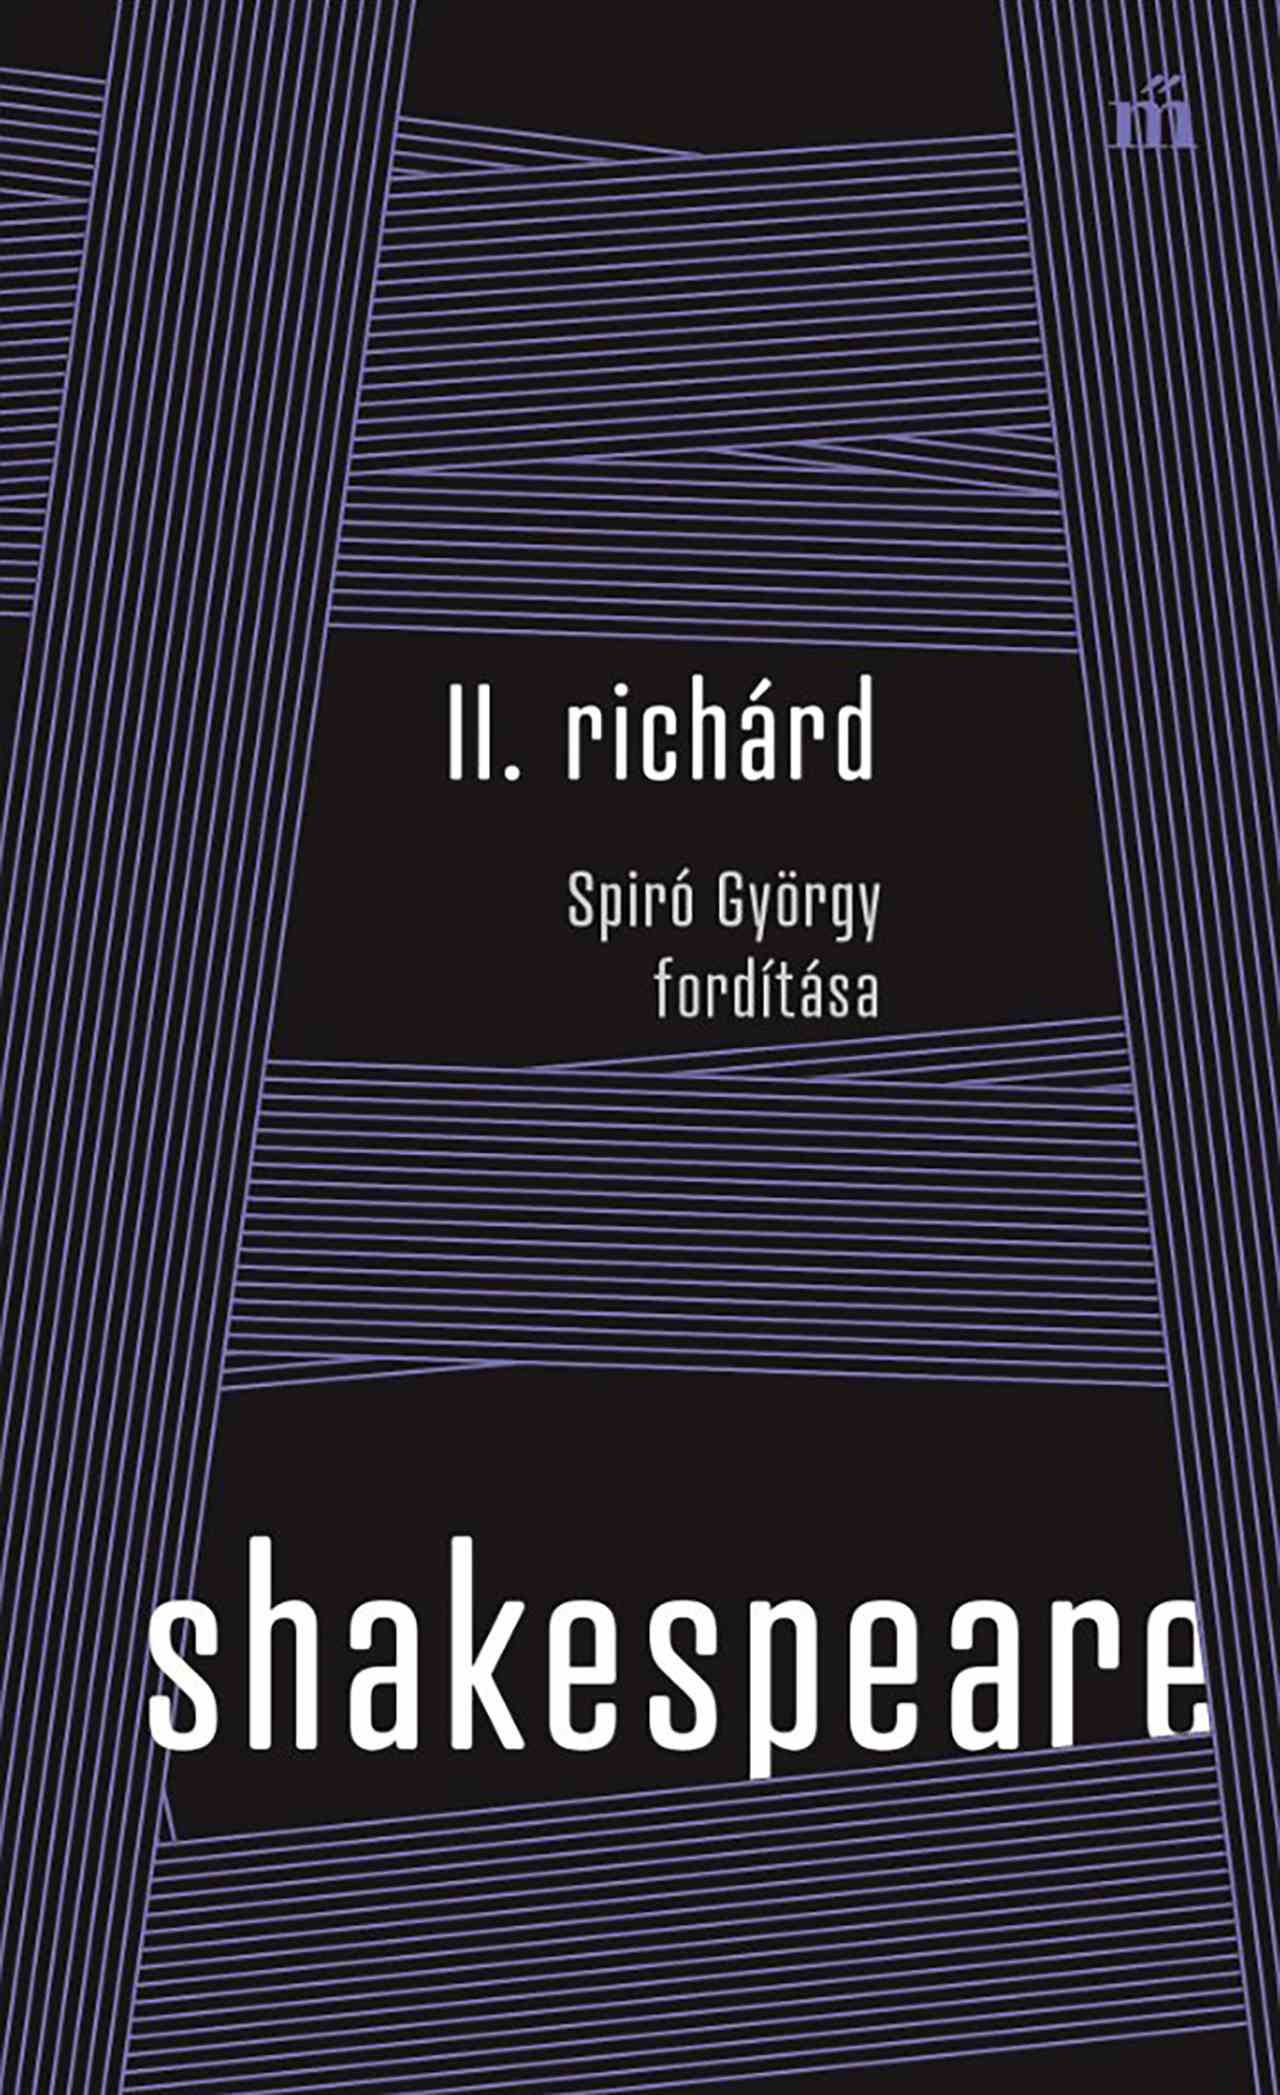 William Shakespeare - II. Richárd - Spiró György fordítása